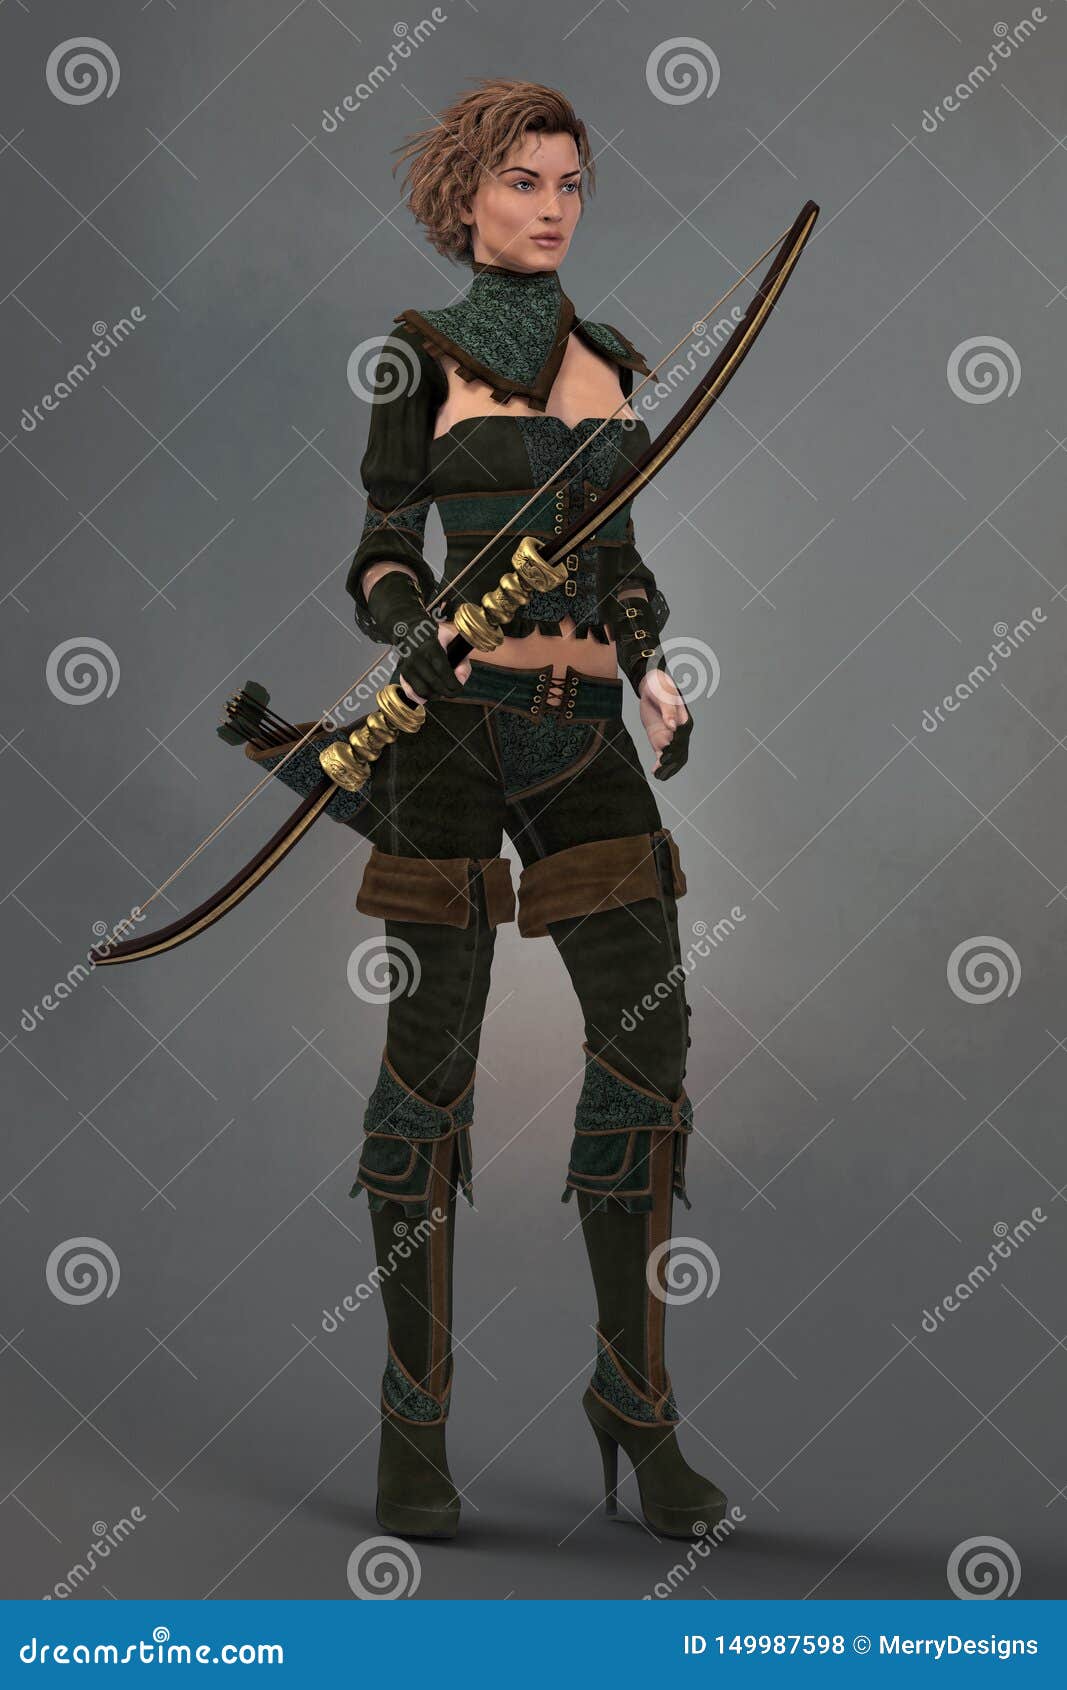 render of a female fantasy woodlands ranger holding a bow